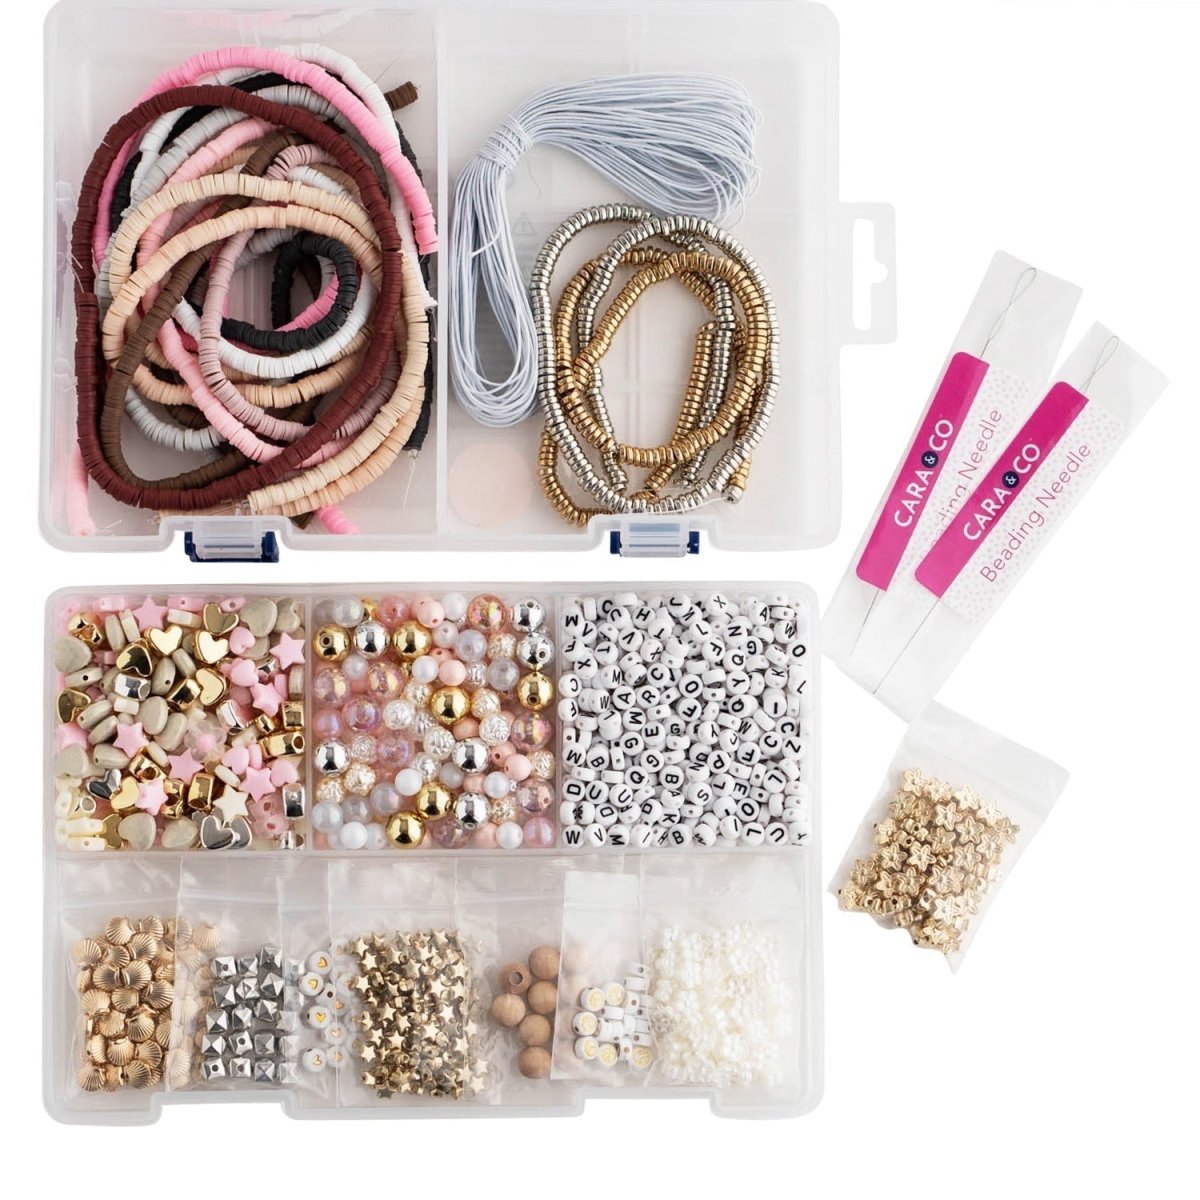 Acrylic Craft Kits Girls Night Bracelet Kit from Cara & Co Craft Supply